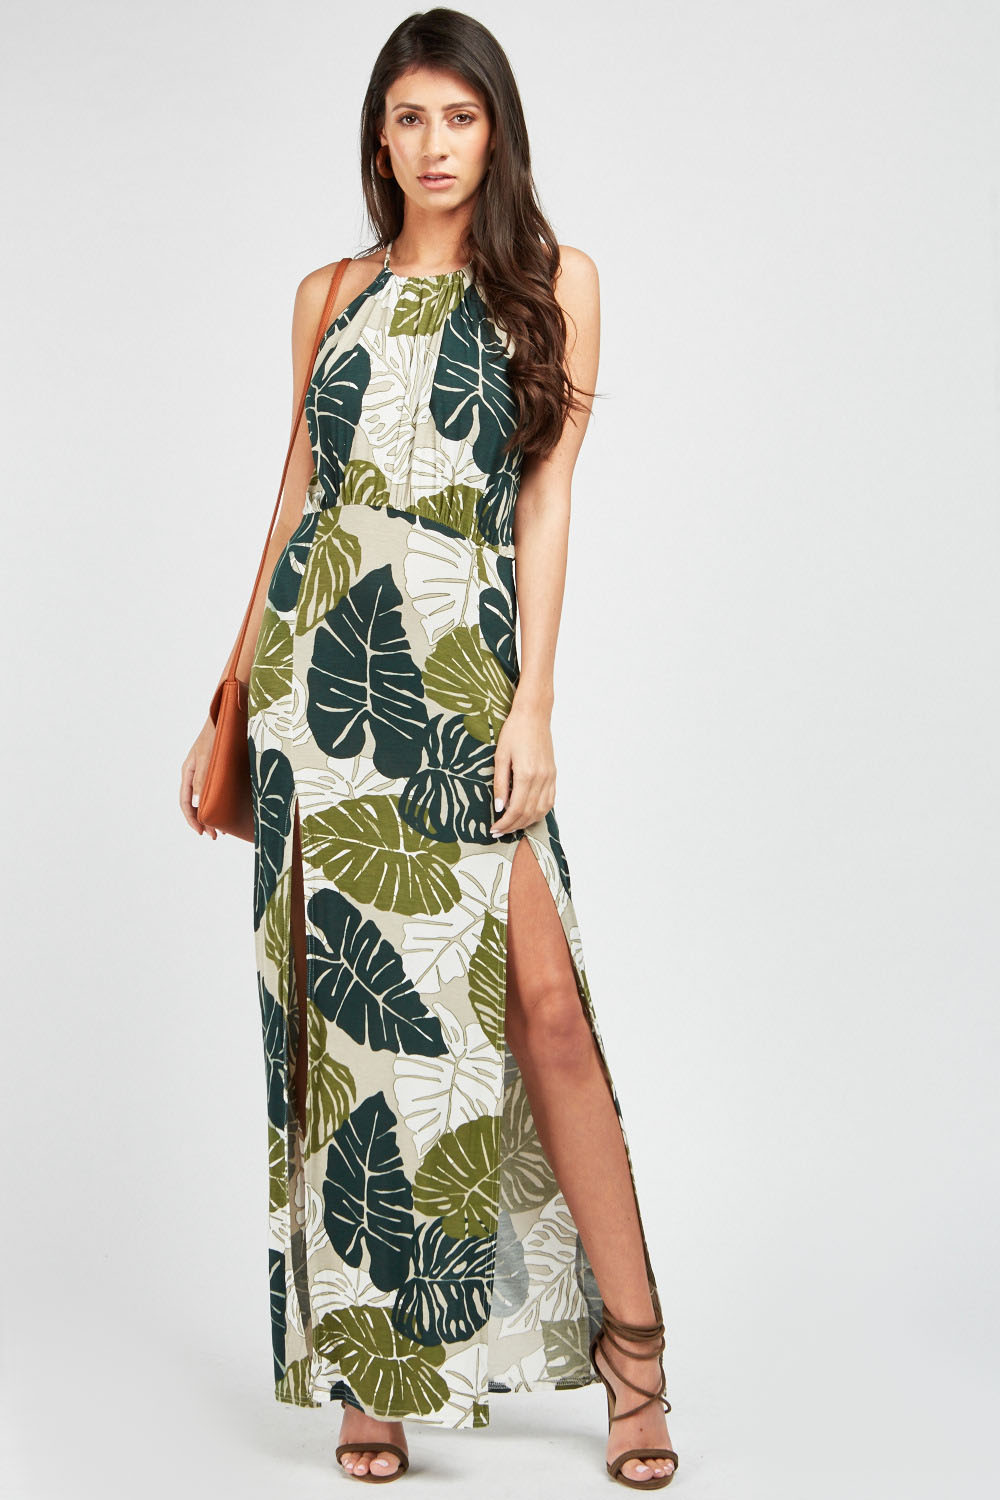 Leaf Printed Maxi Dress - Just $7